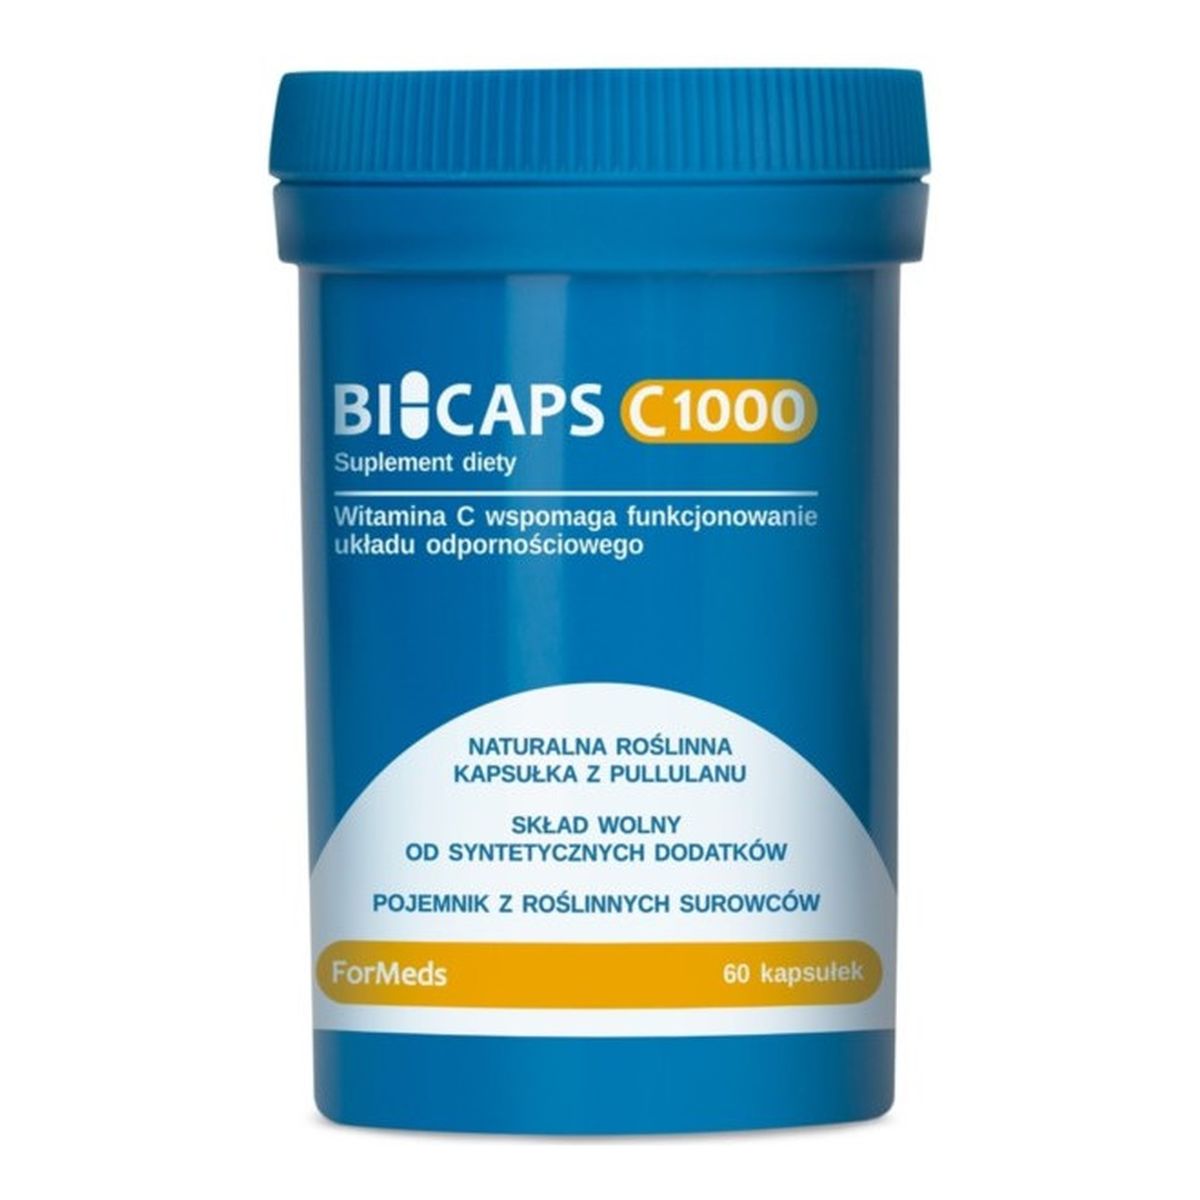 Formeds Bicaps C 1000 suplement diety 60 Kapsułek